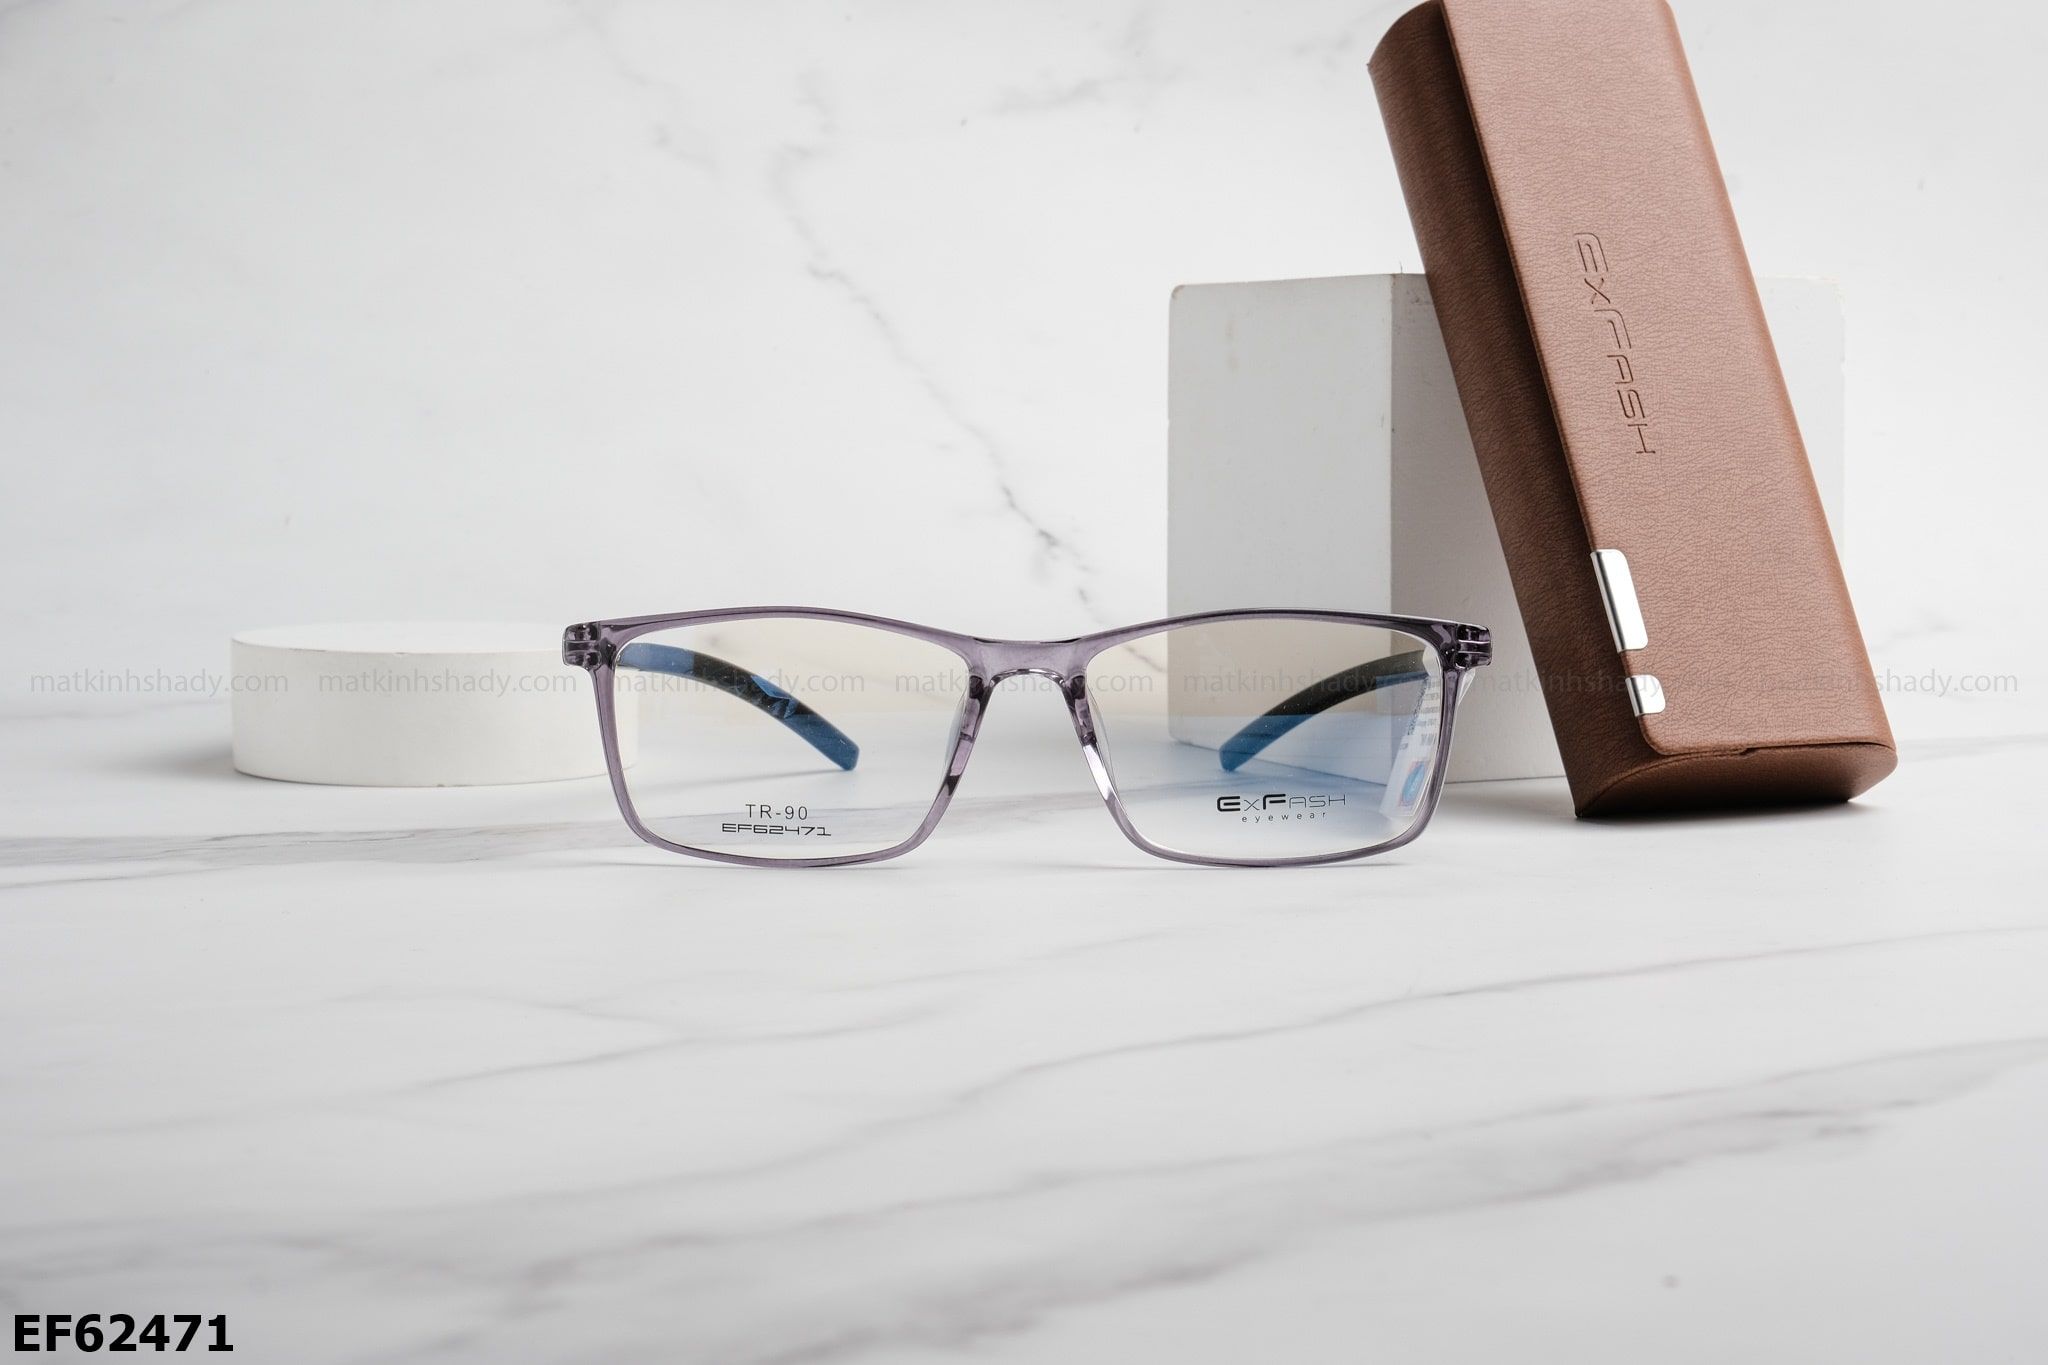  Exfash Eyewear - Glasses - EF62471 